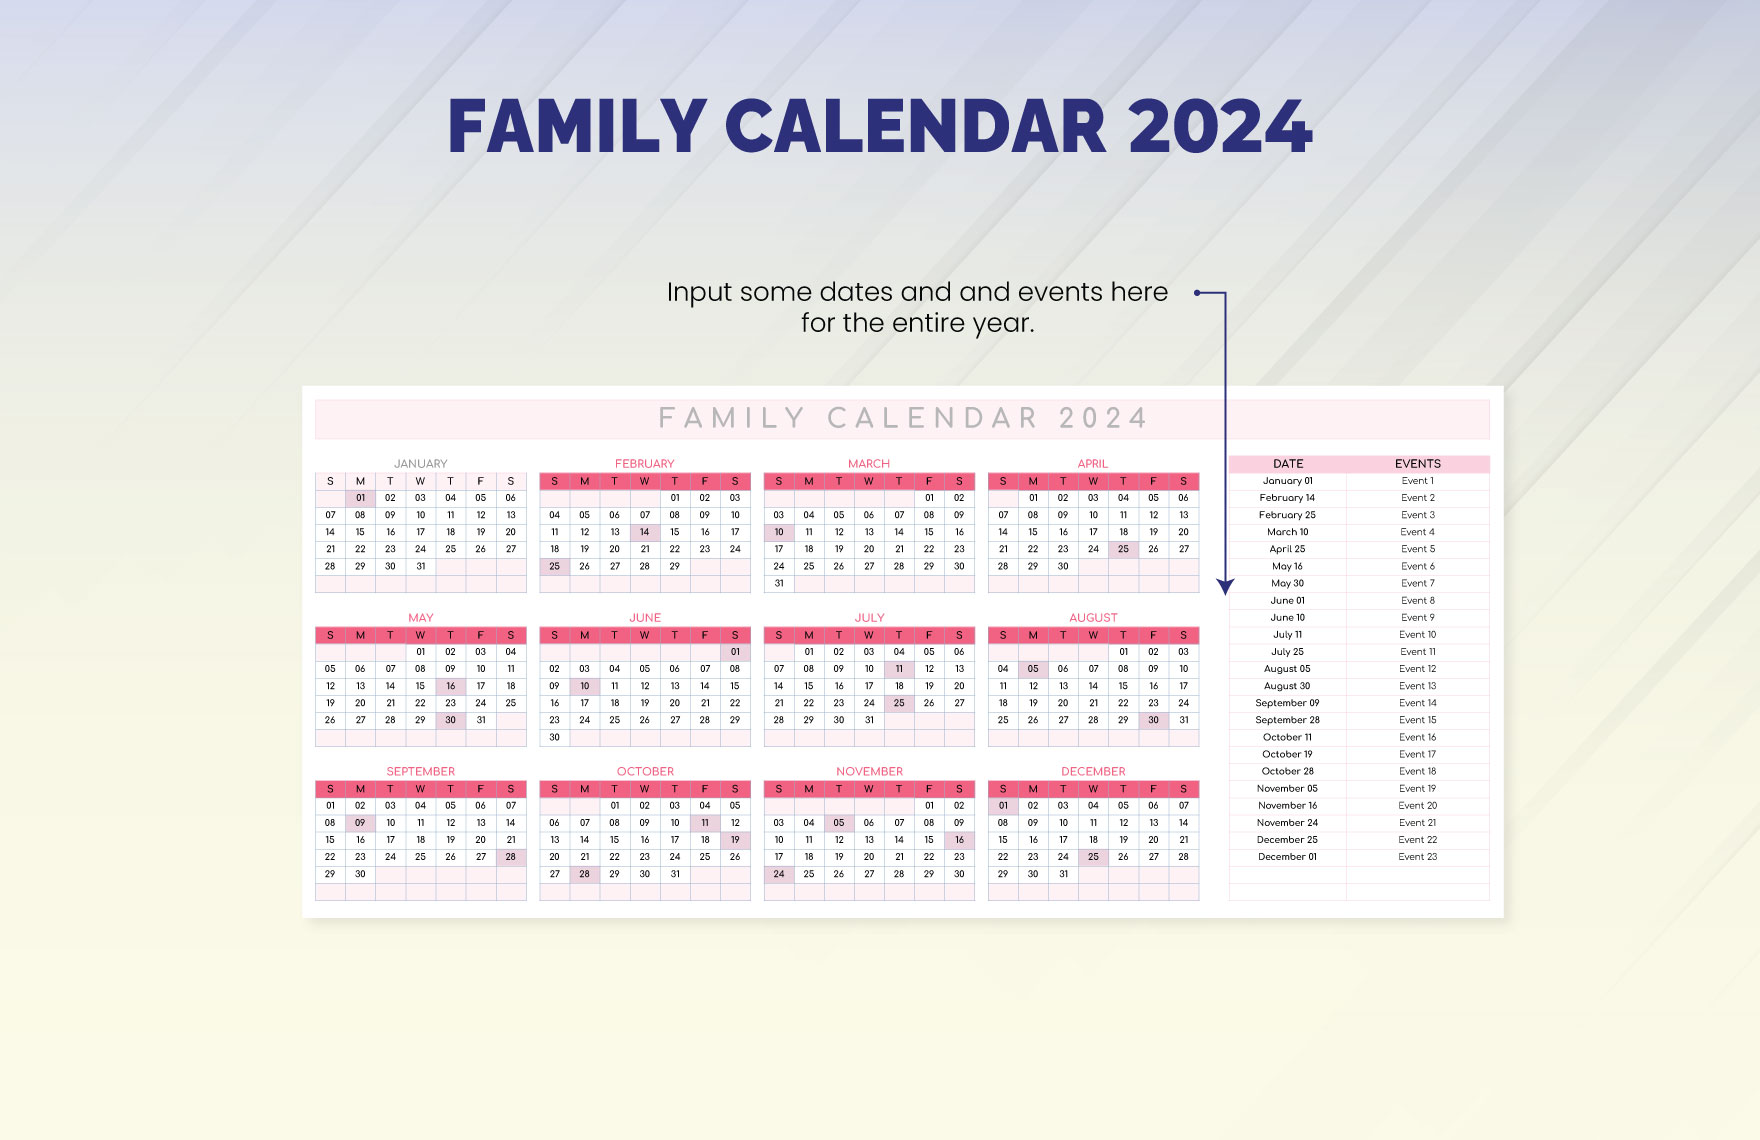 Family Calendar 2024 Template